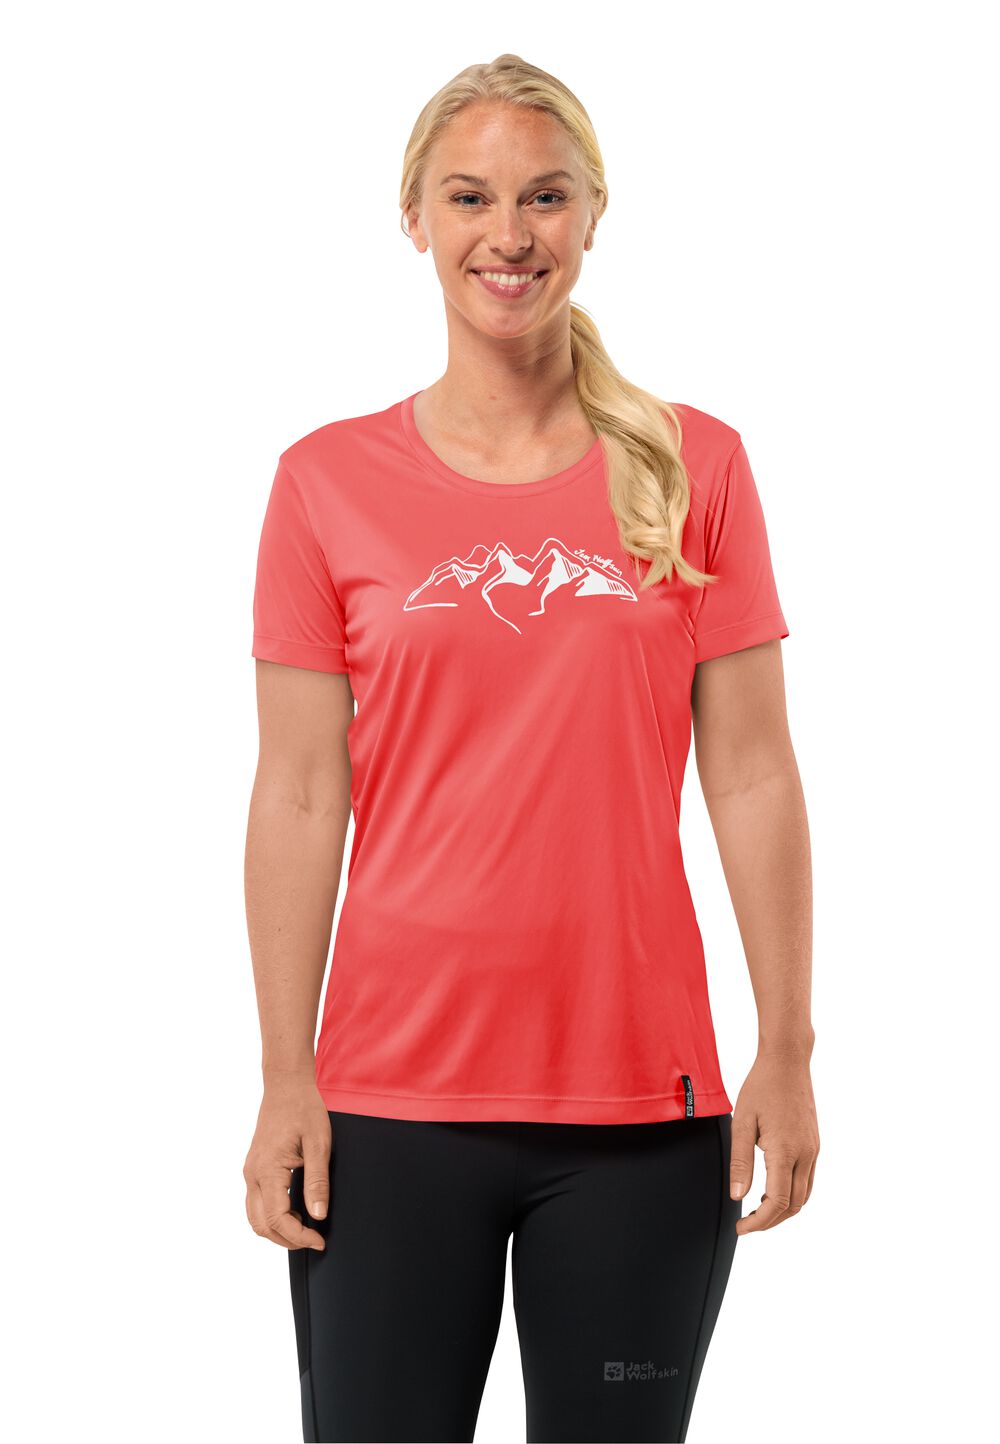 Jack Wolfskin Peak Graphic T-Shirt Women Functioneel shirt Dames XL rood vibrant red